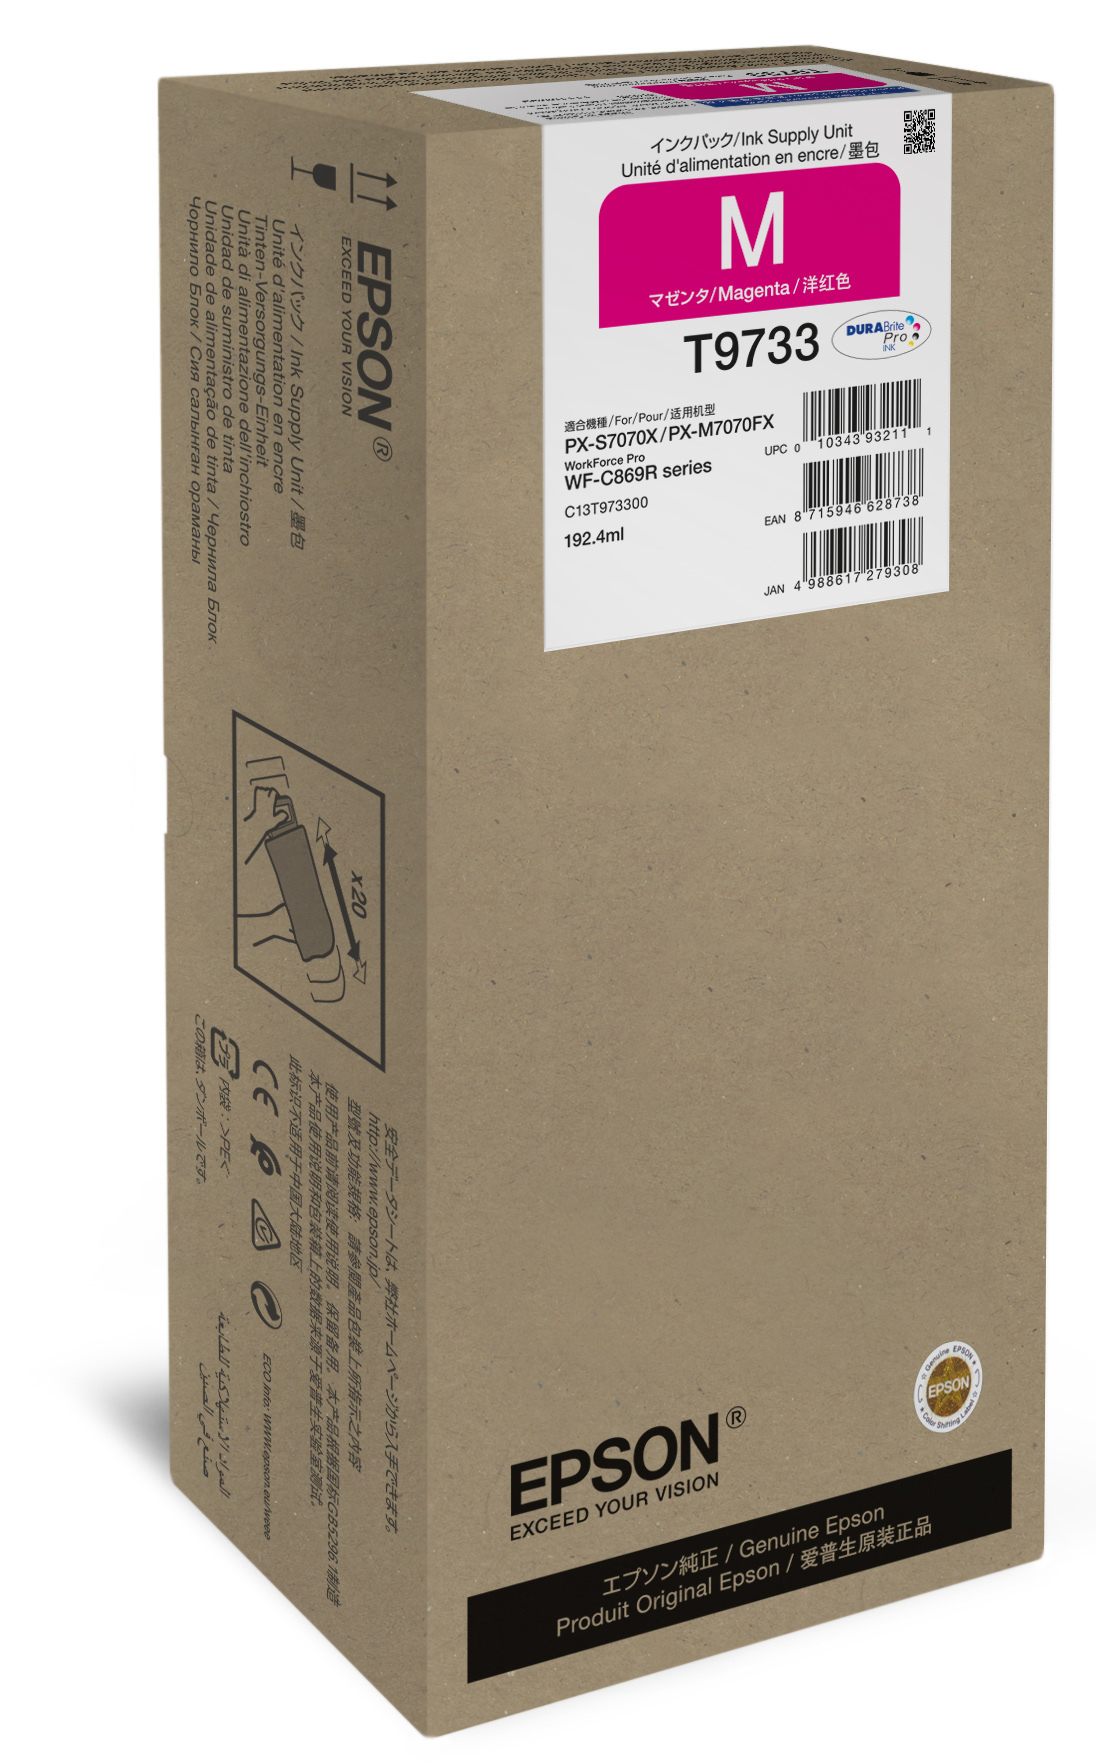 Epson Magenta XL Ink Supply Unit single pack / magenta